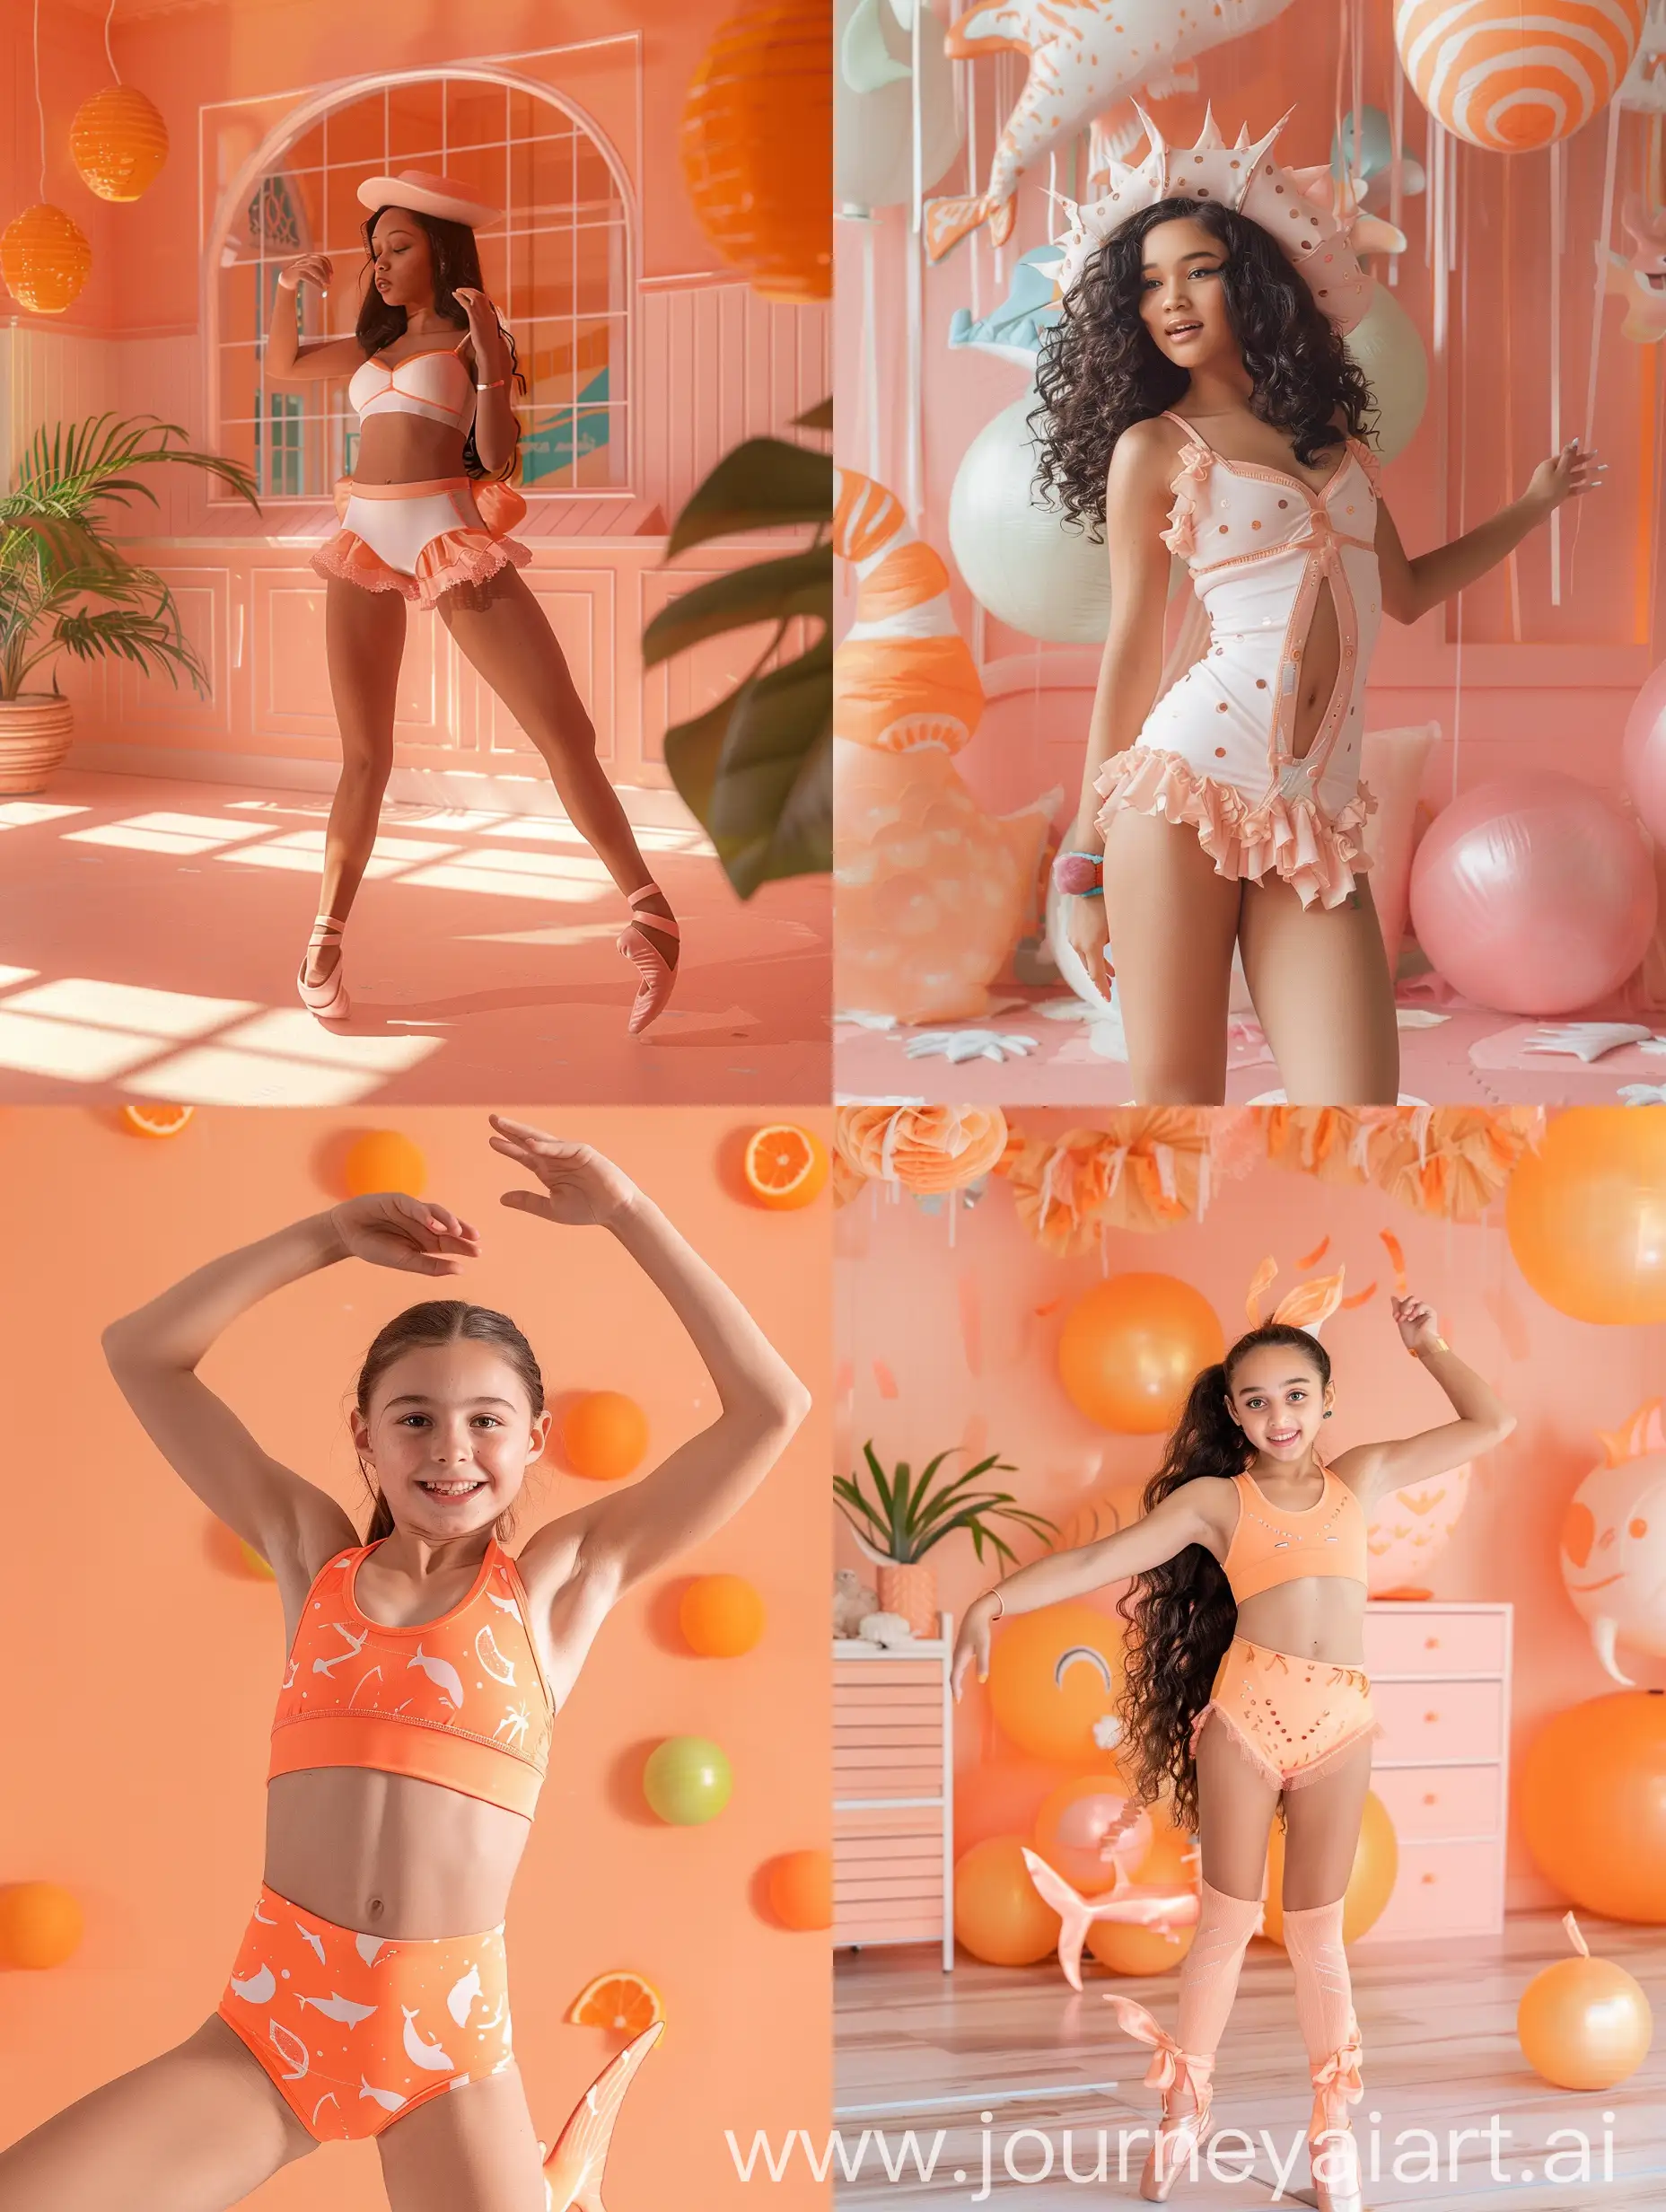 Teen girl, cuban, dancing, gymshark outfit, in a peach theme dance studio